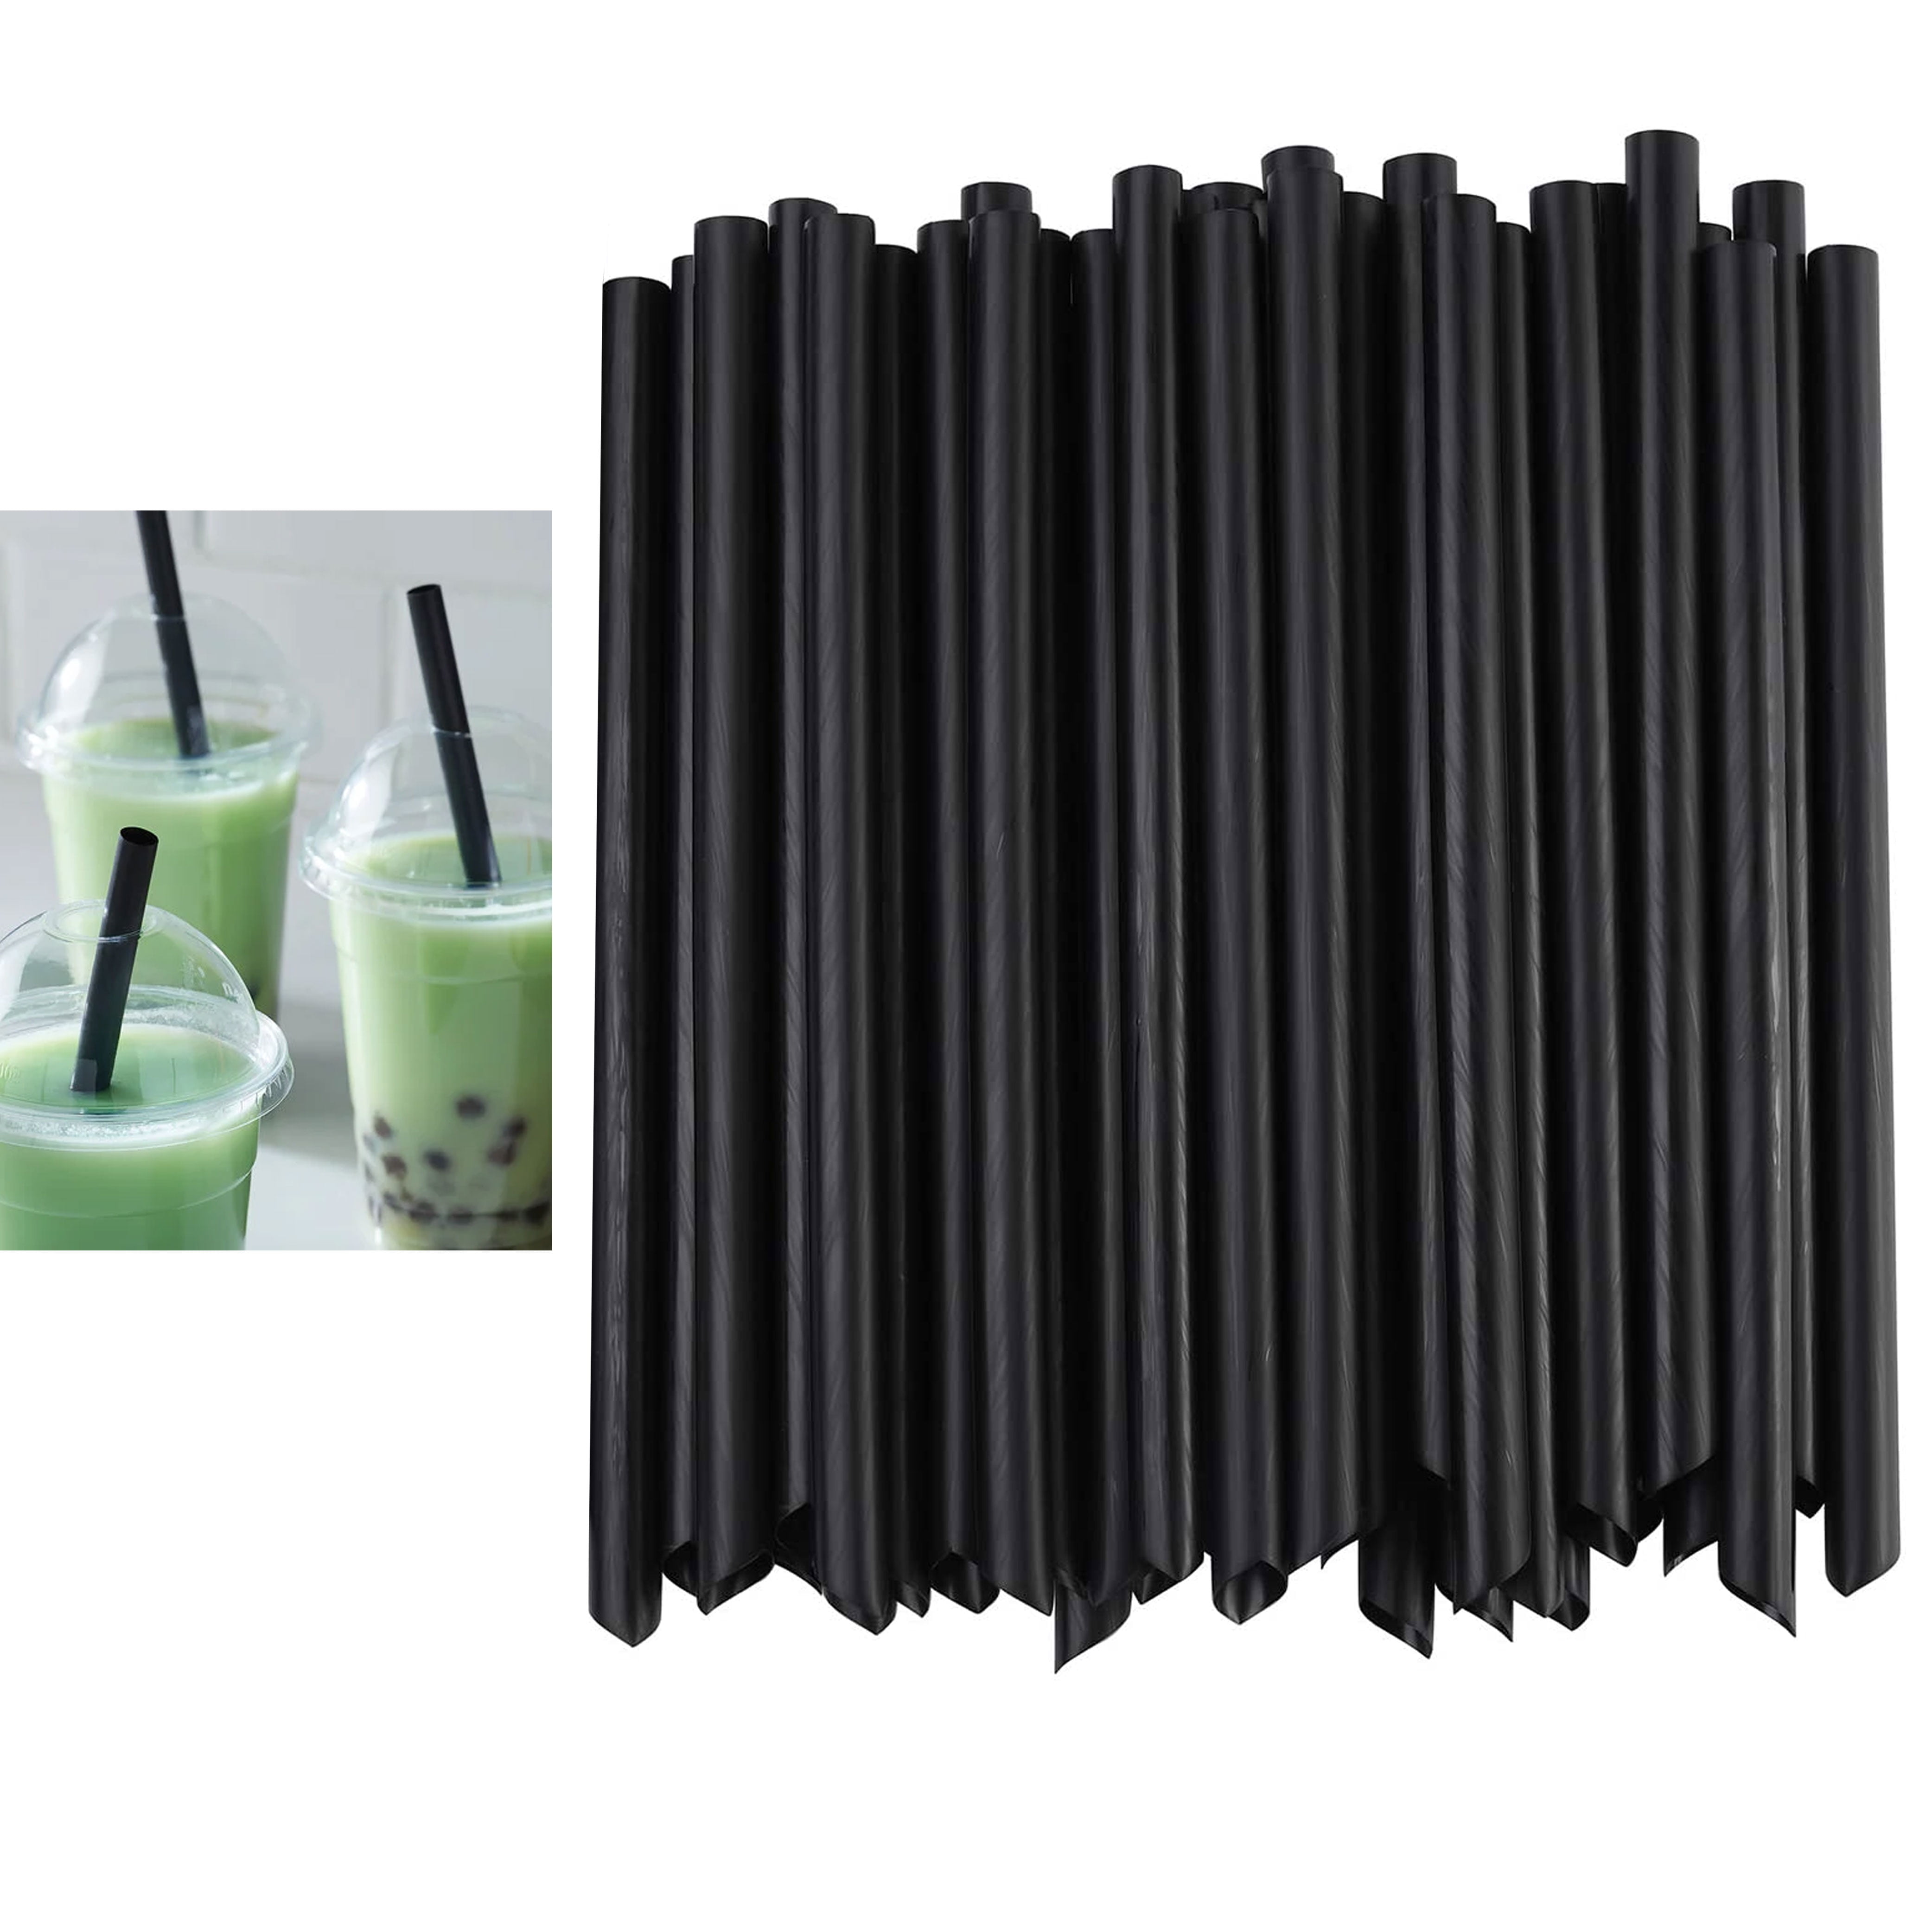 Plastic Straws 5.75'' Bubble Tea Sample Straws (10mm) - Black - 2,000